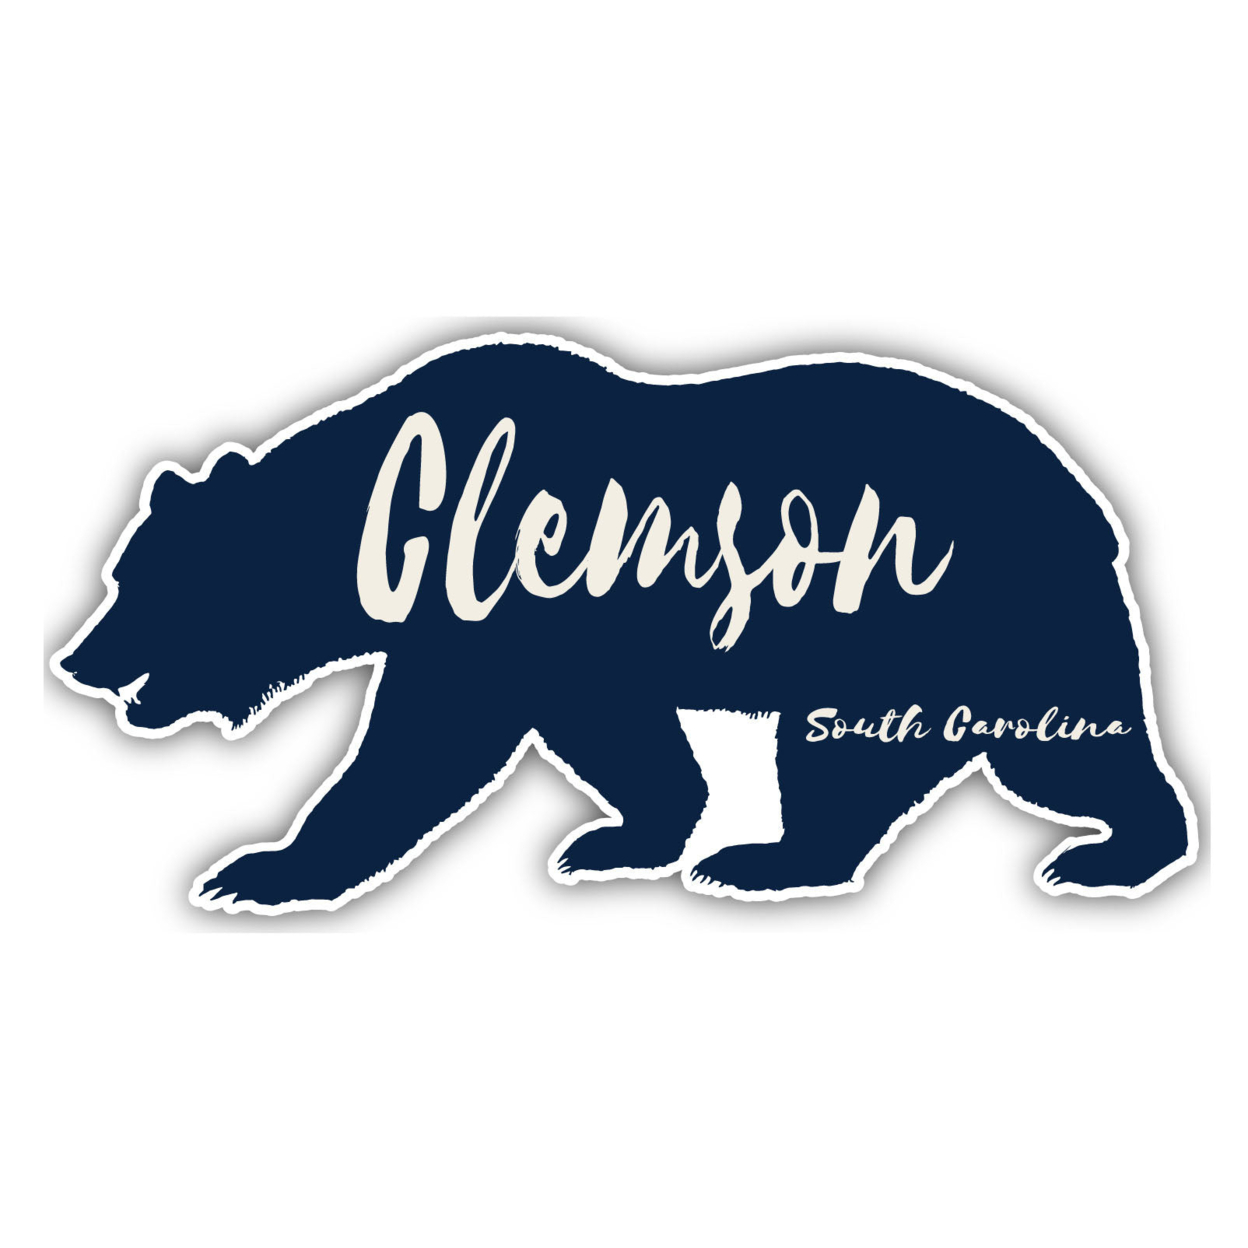 Clemson South Carolina Souvenir Decorative Stickers (Choose Theme And Size) - 4-Pack, 12-Inch, Bear